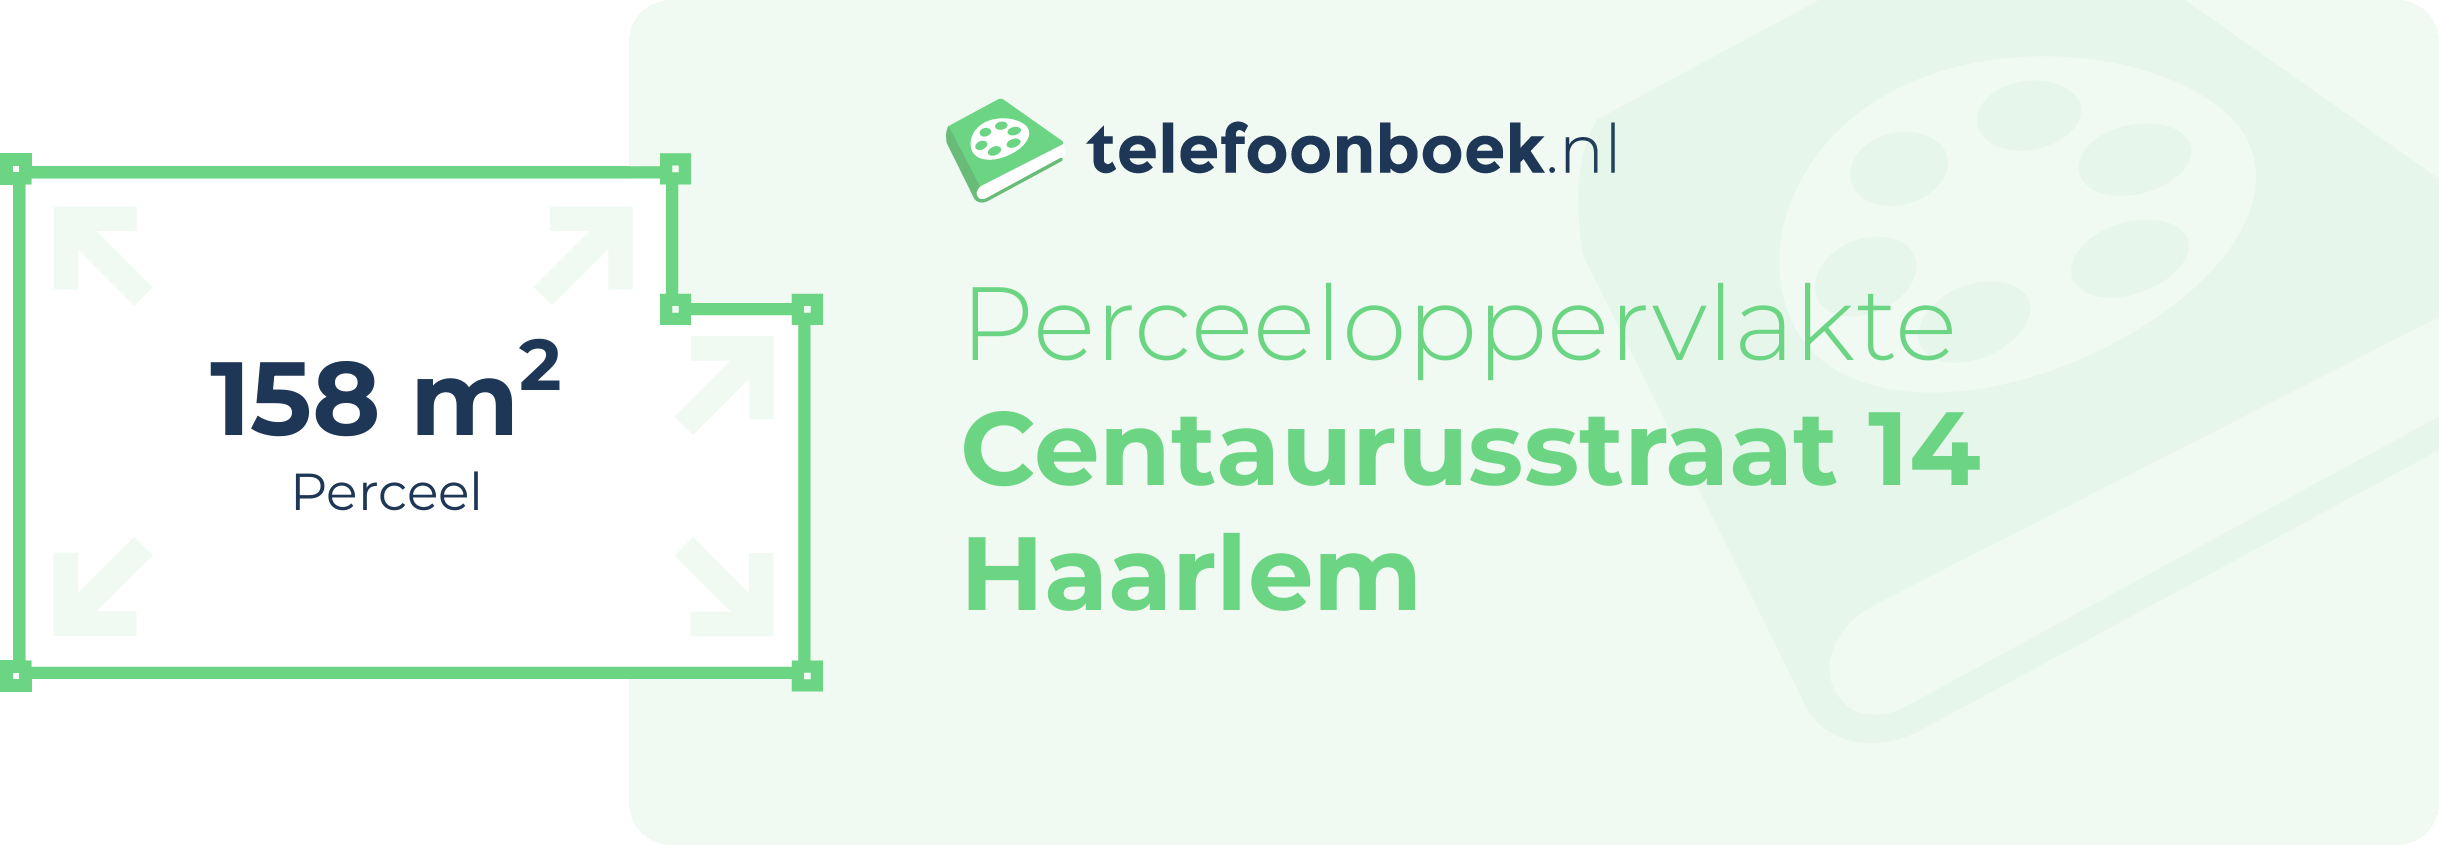 Perceeloppervlakte Centaurusstraat 14 Haarlem